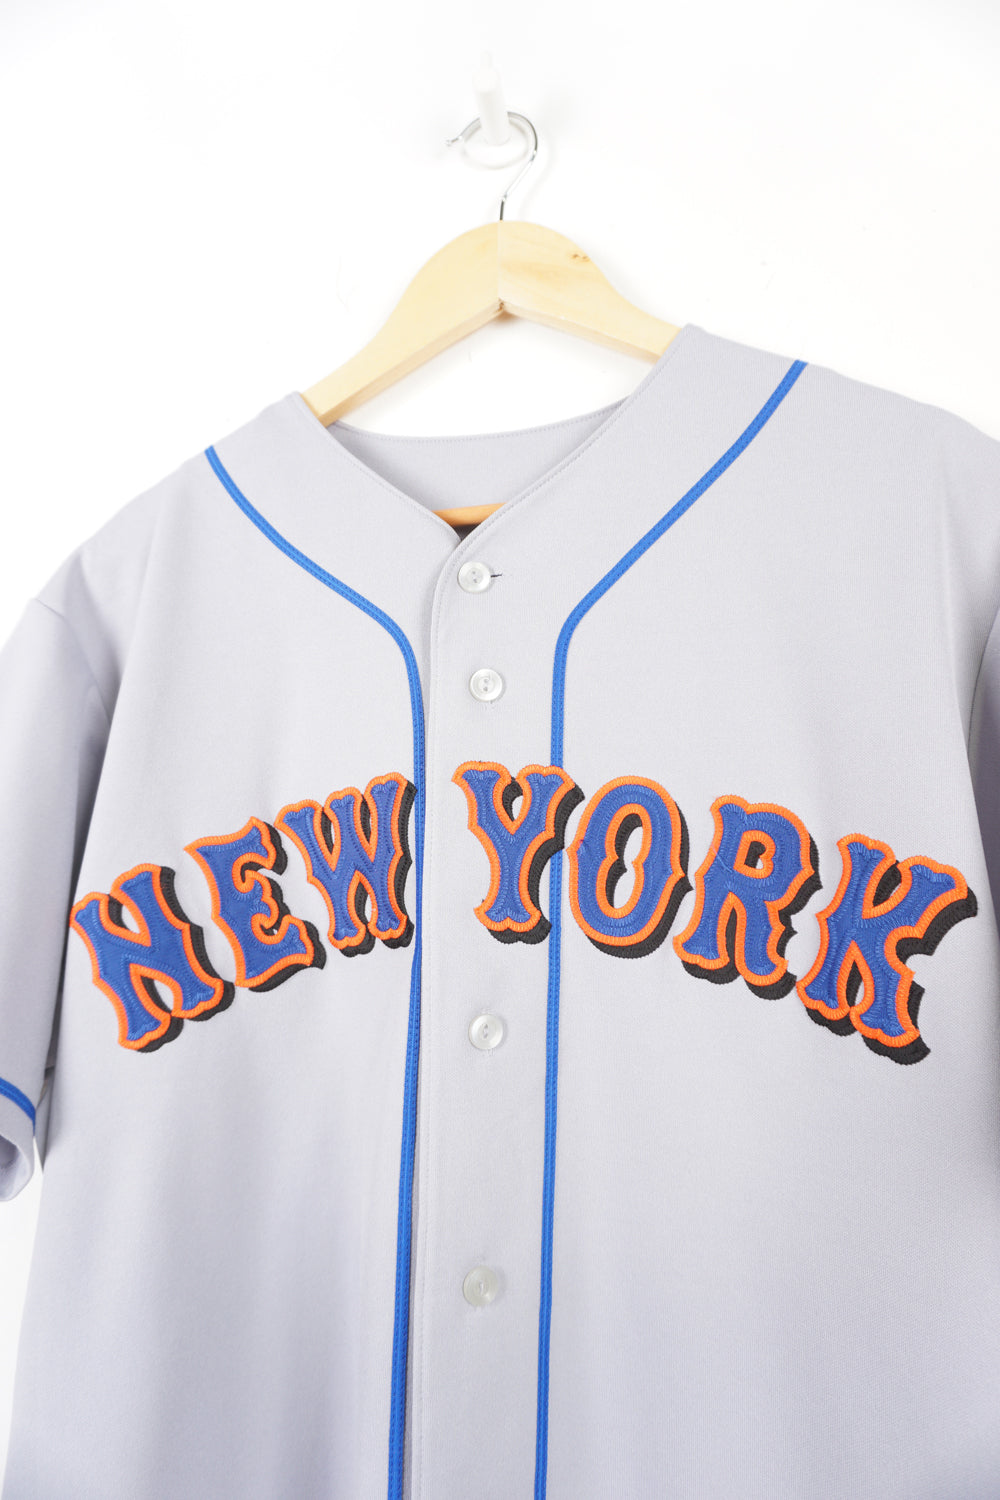 New York Mets MLB Jersey – VintageFolk